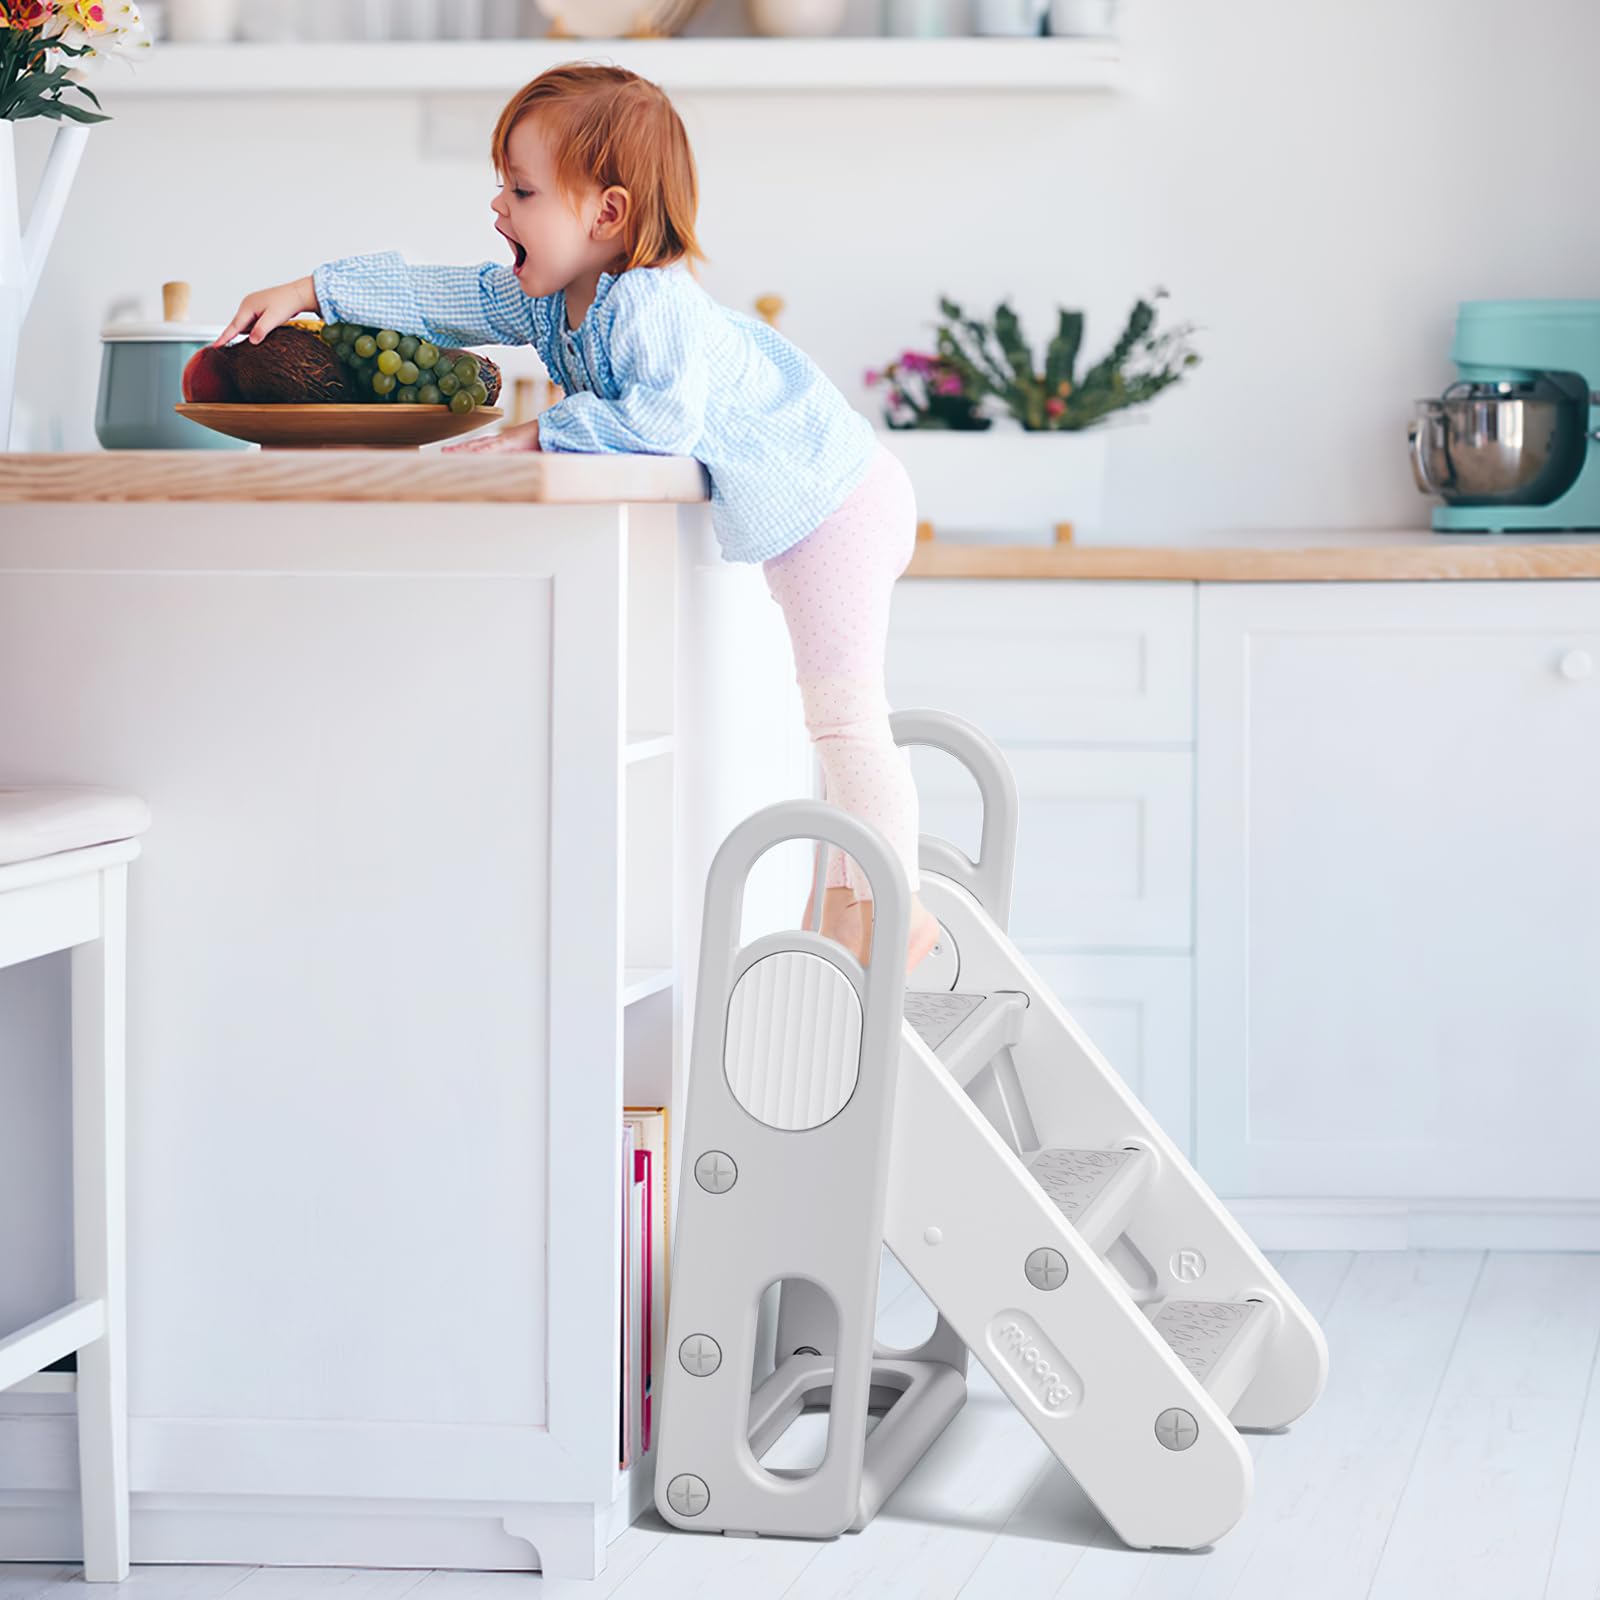 Mloong Kids Step Stool Foldable for Bathroom Sink, Easy Folding Non-Slip Bathroom Stool Toilet Potty Training Stool, Adjustable Toddler Ladder Kitchen Counter Stool Helper